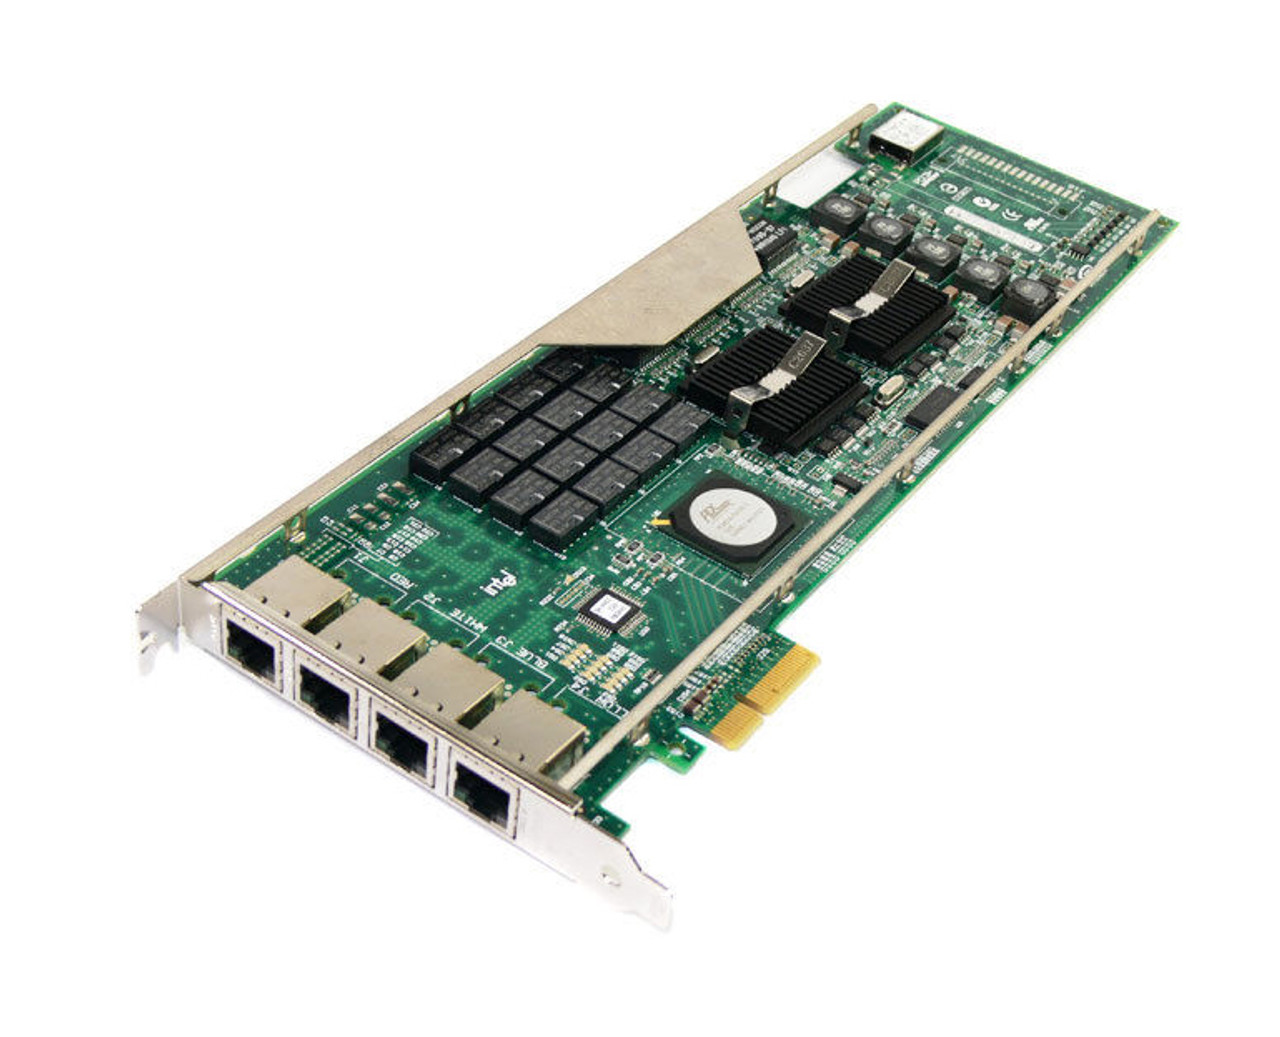 EXPI9024PTBLK - Intel PRO/1000 PT Quad -Port BYPASS Server Adapter